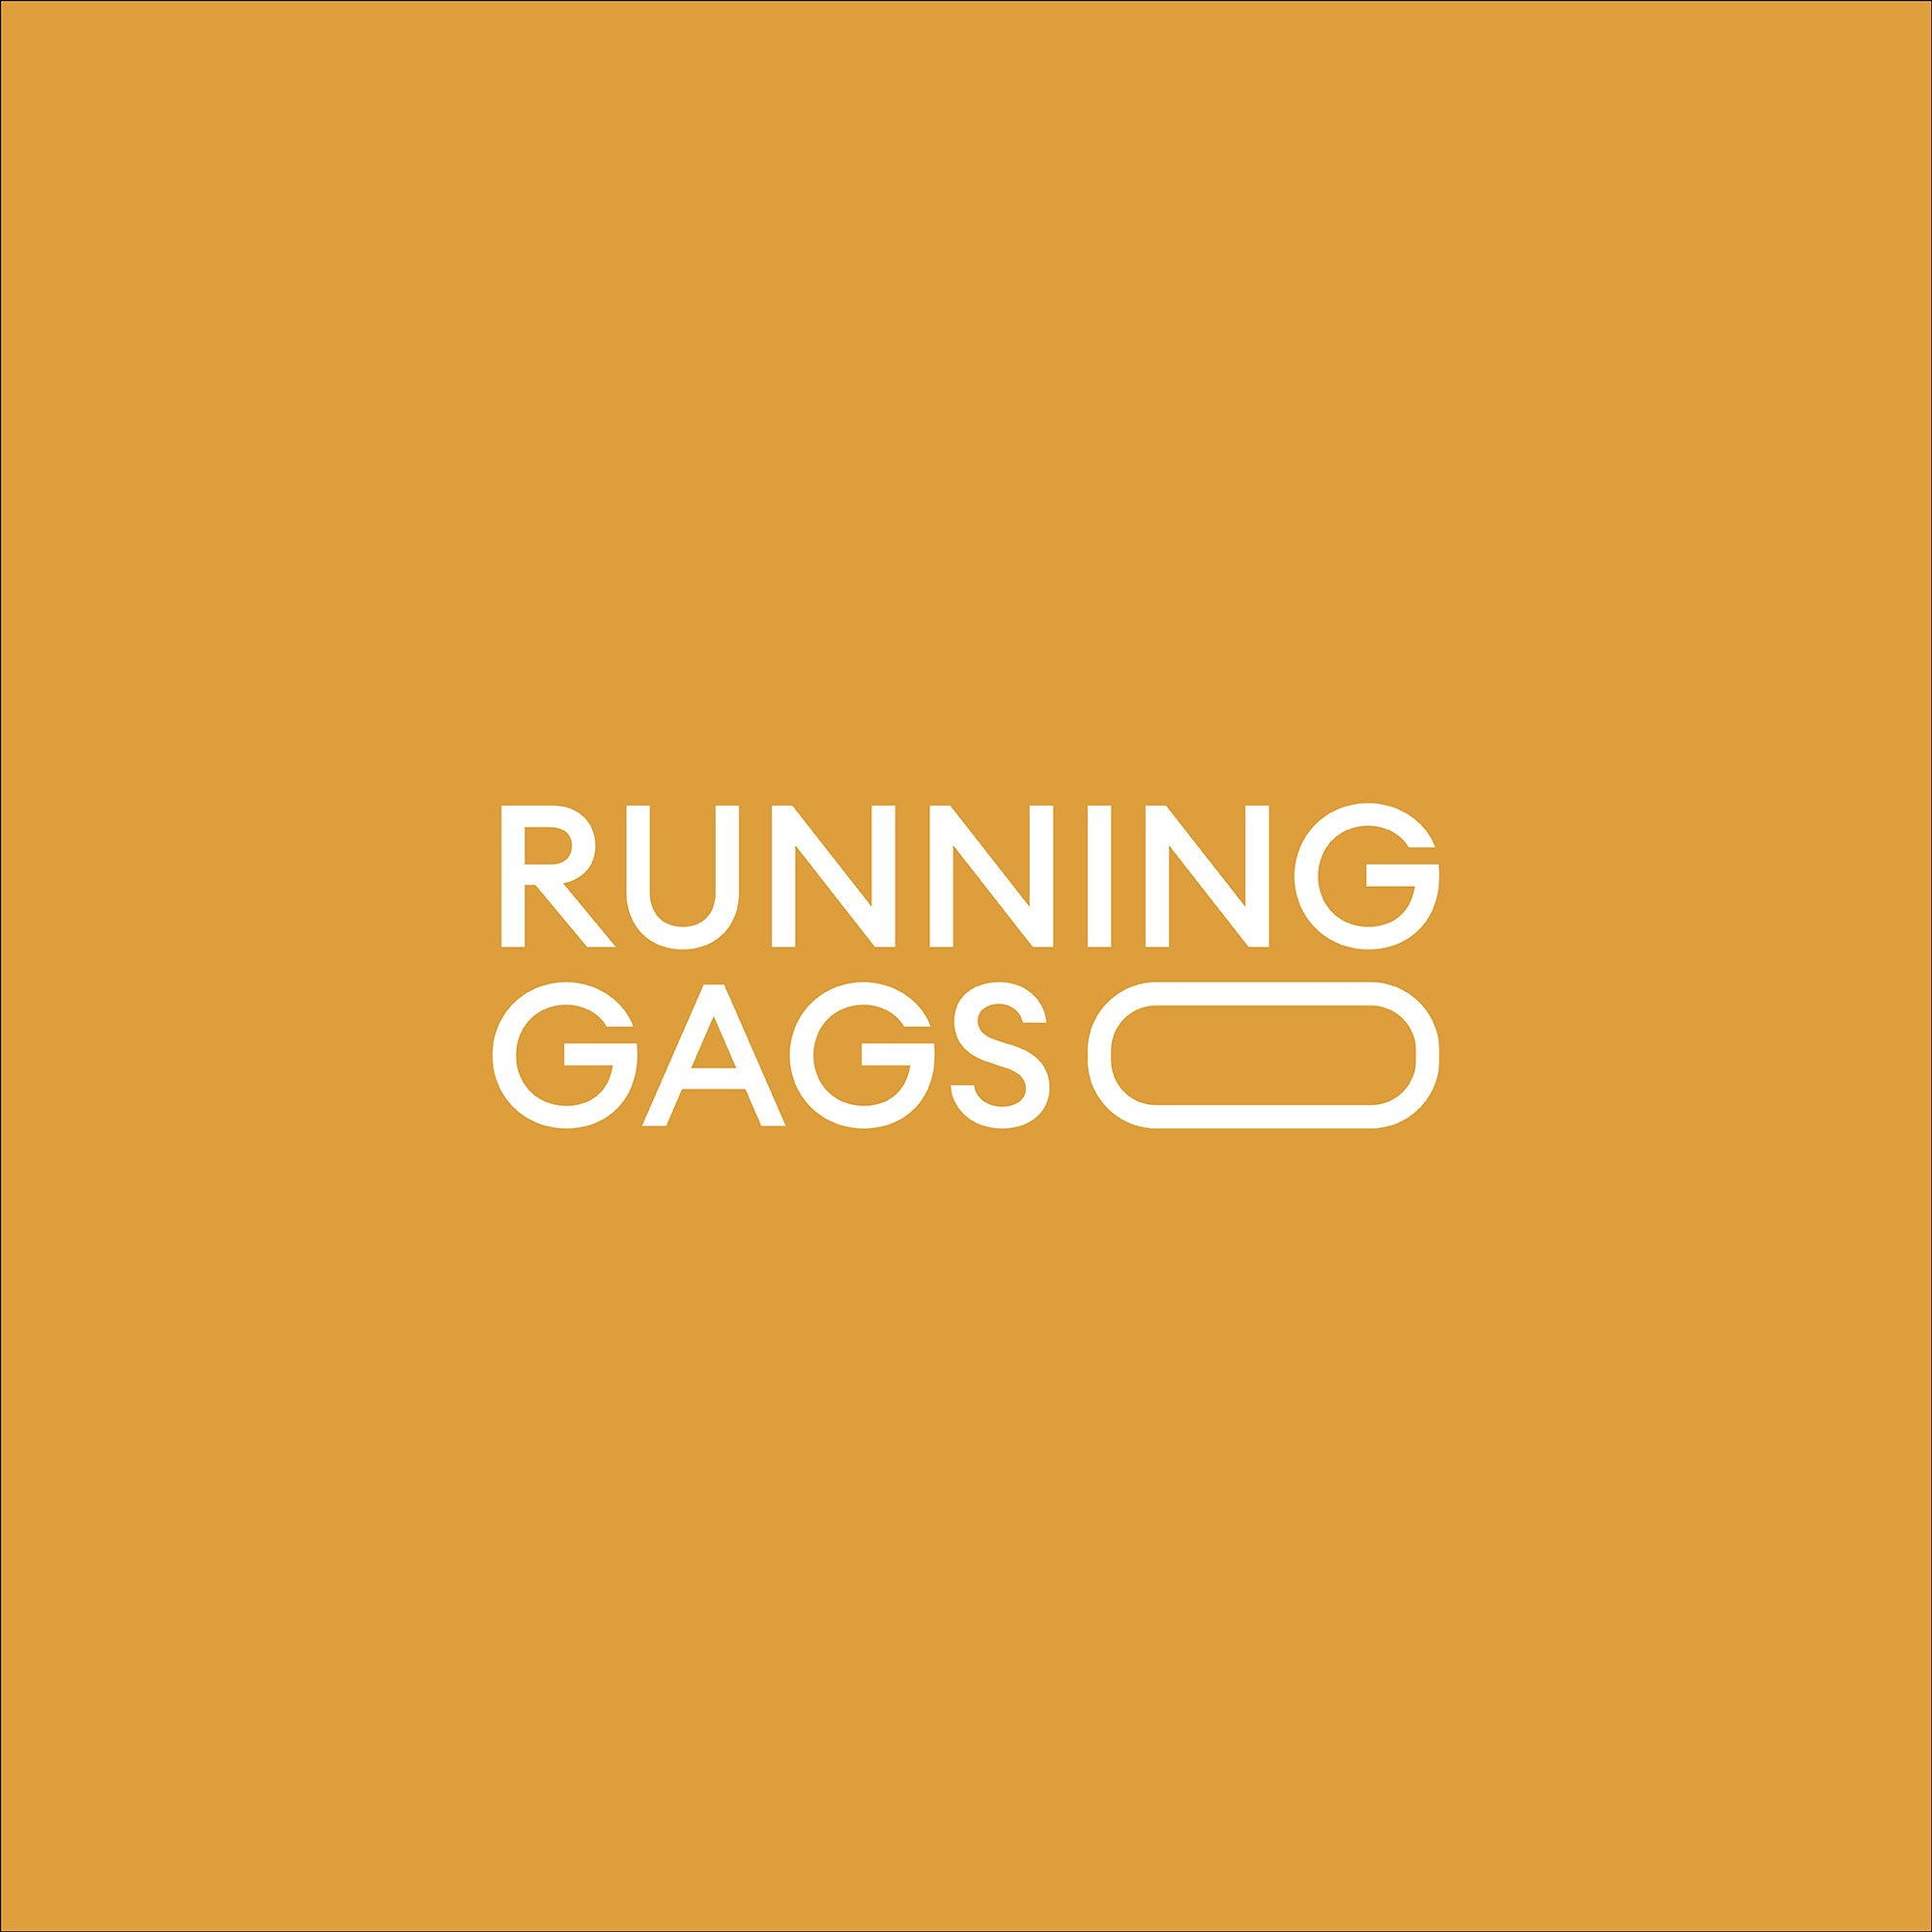 (c) Running-gags.de